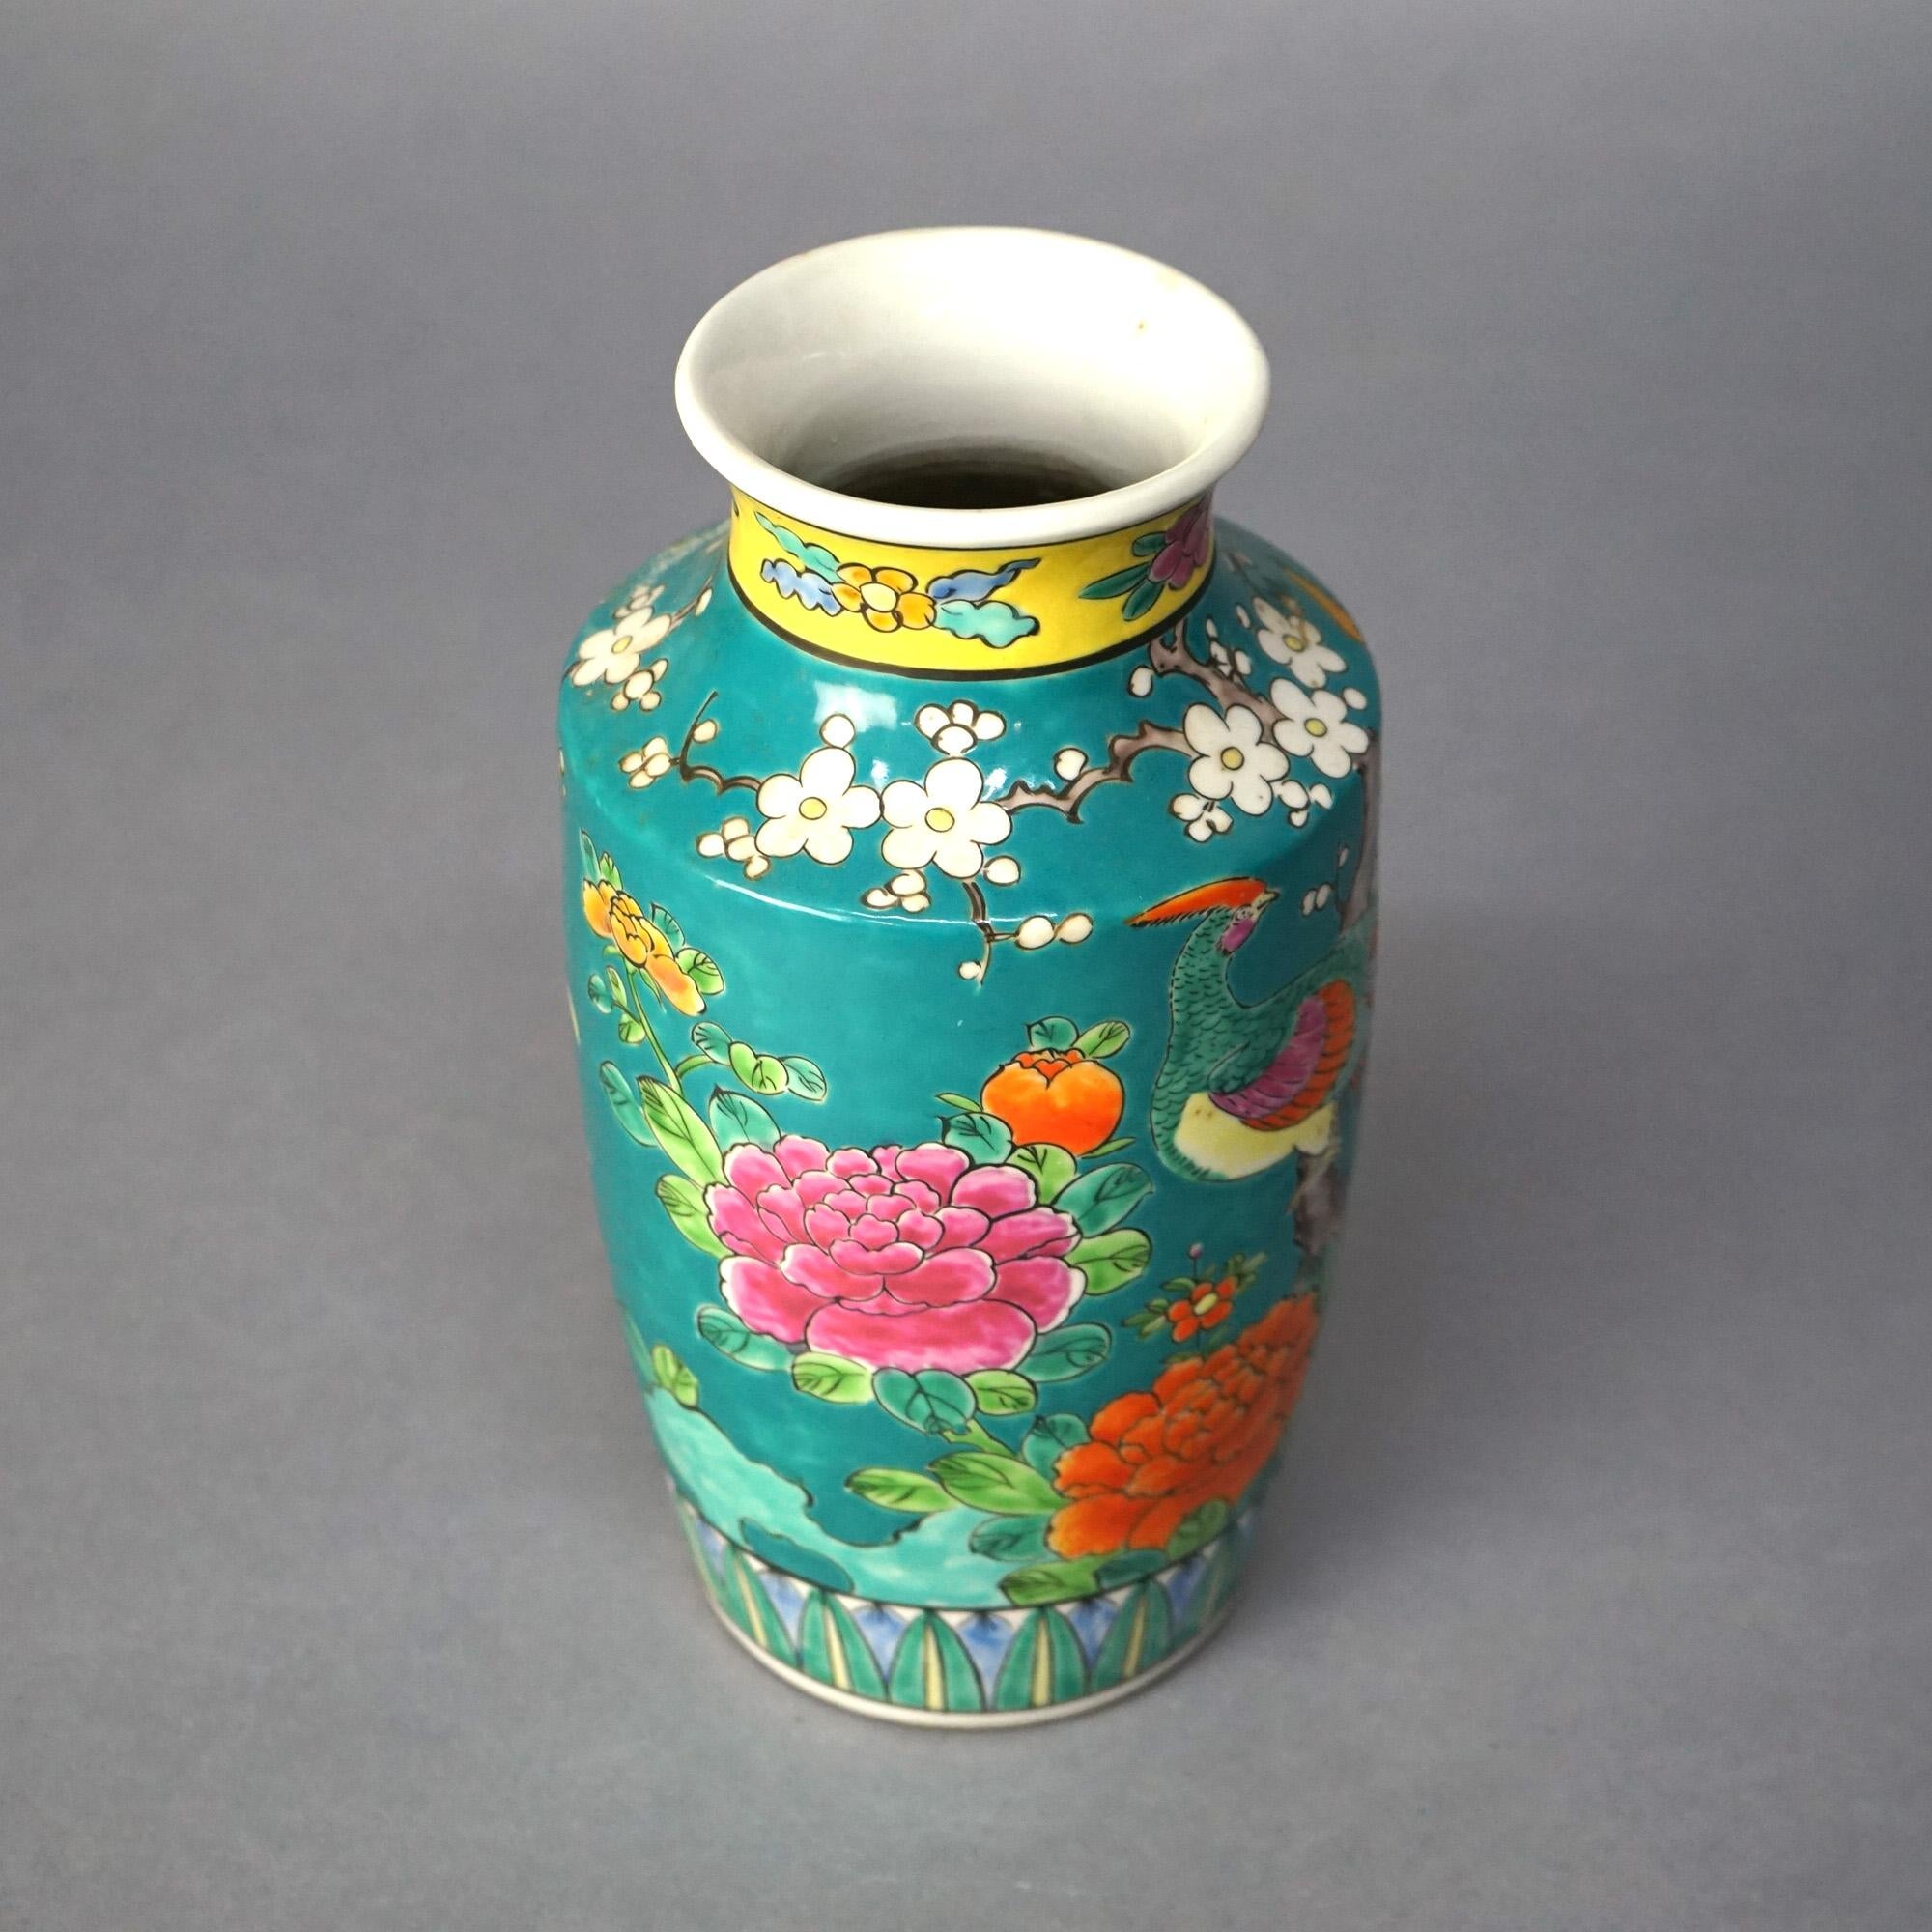 Antique Japanese Porcelain Enameled Garden Scene Vase with Birds & Flowers C1910

Measures- 10''H x 5''W x 5''D